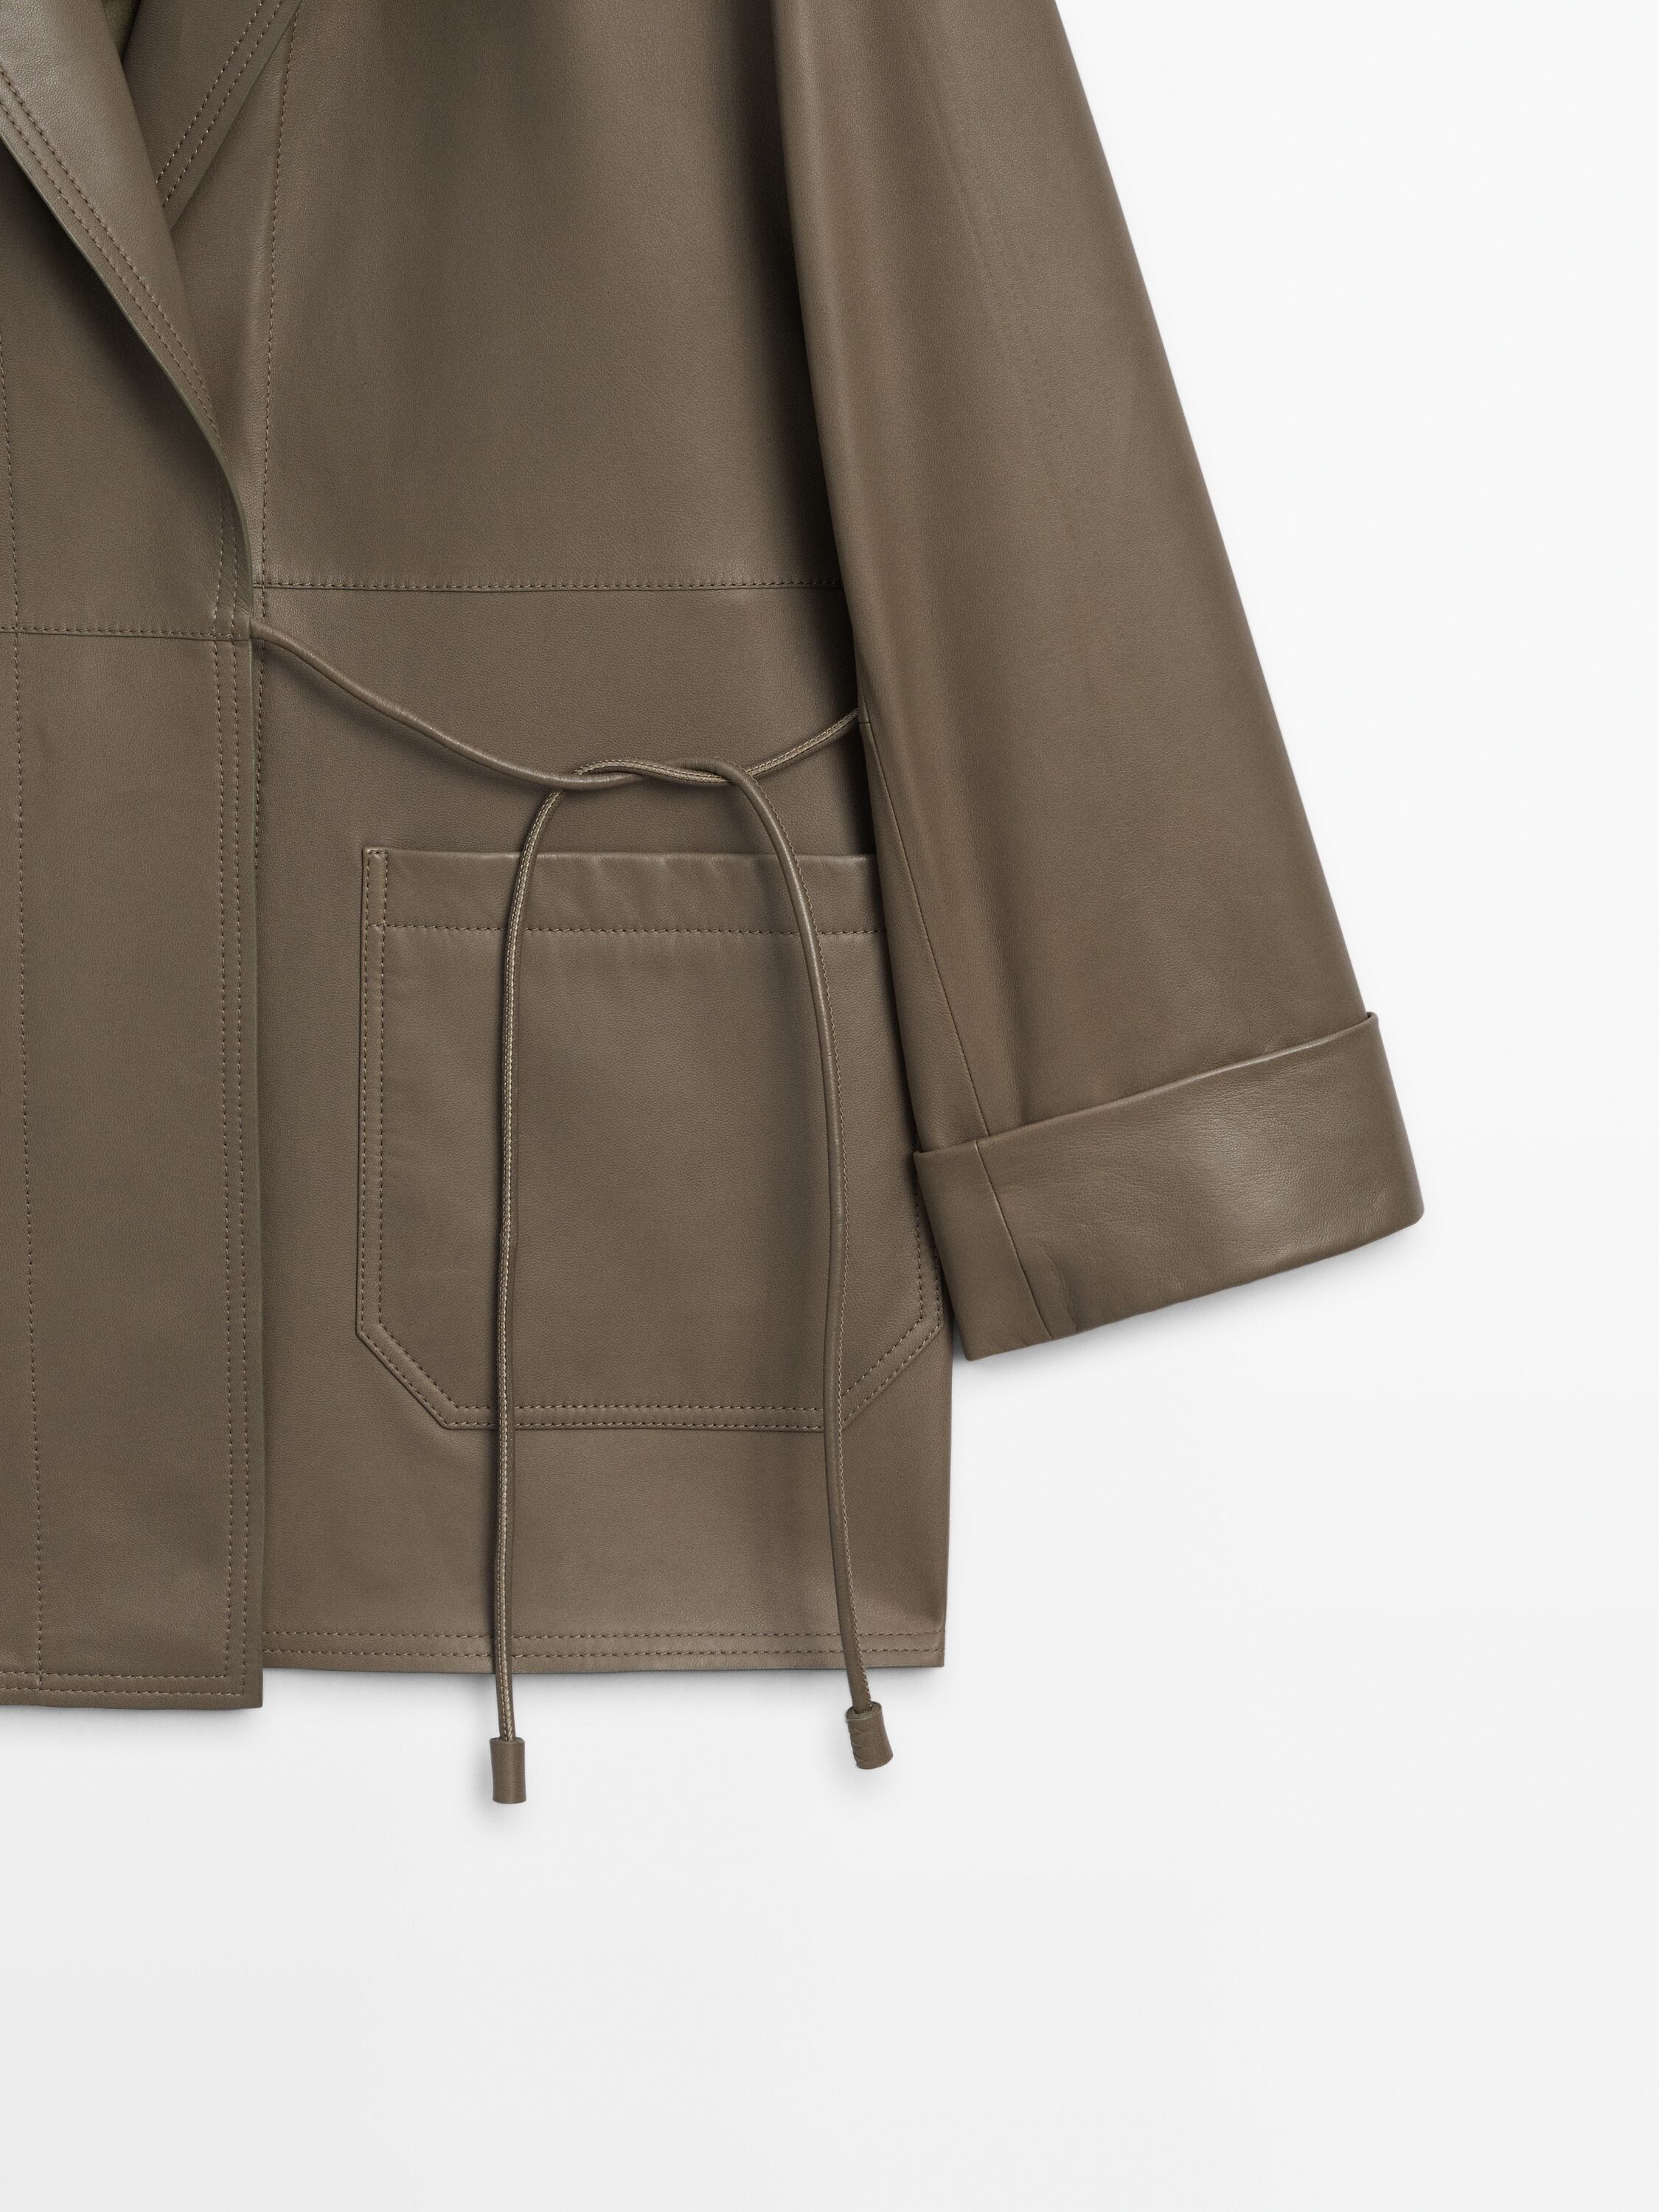 Nappa leather blazer with drawstrings